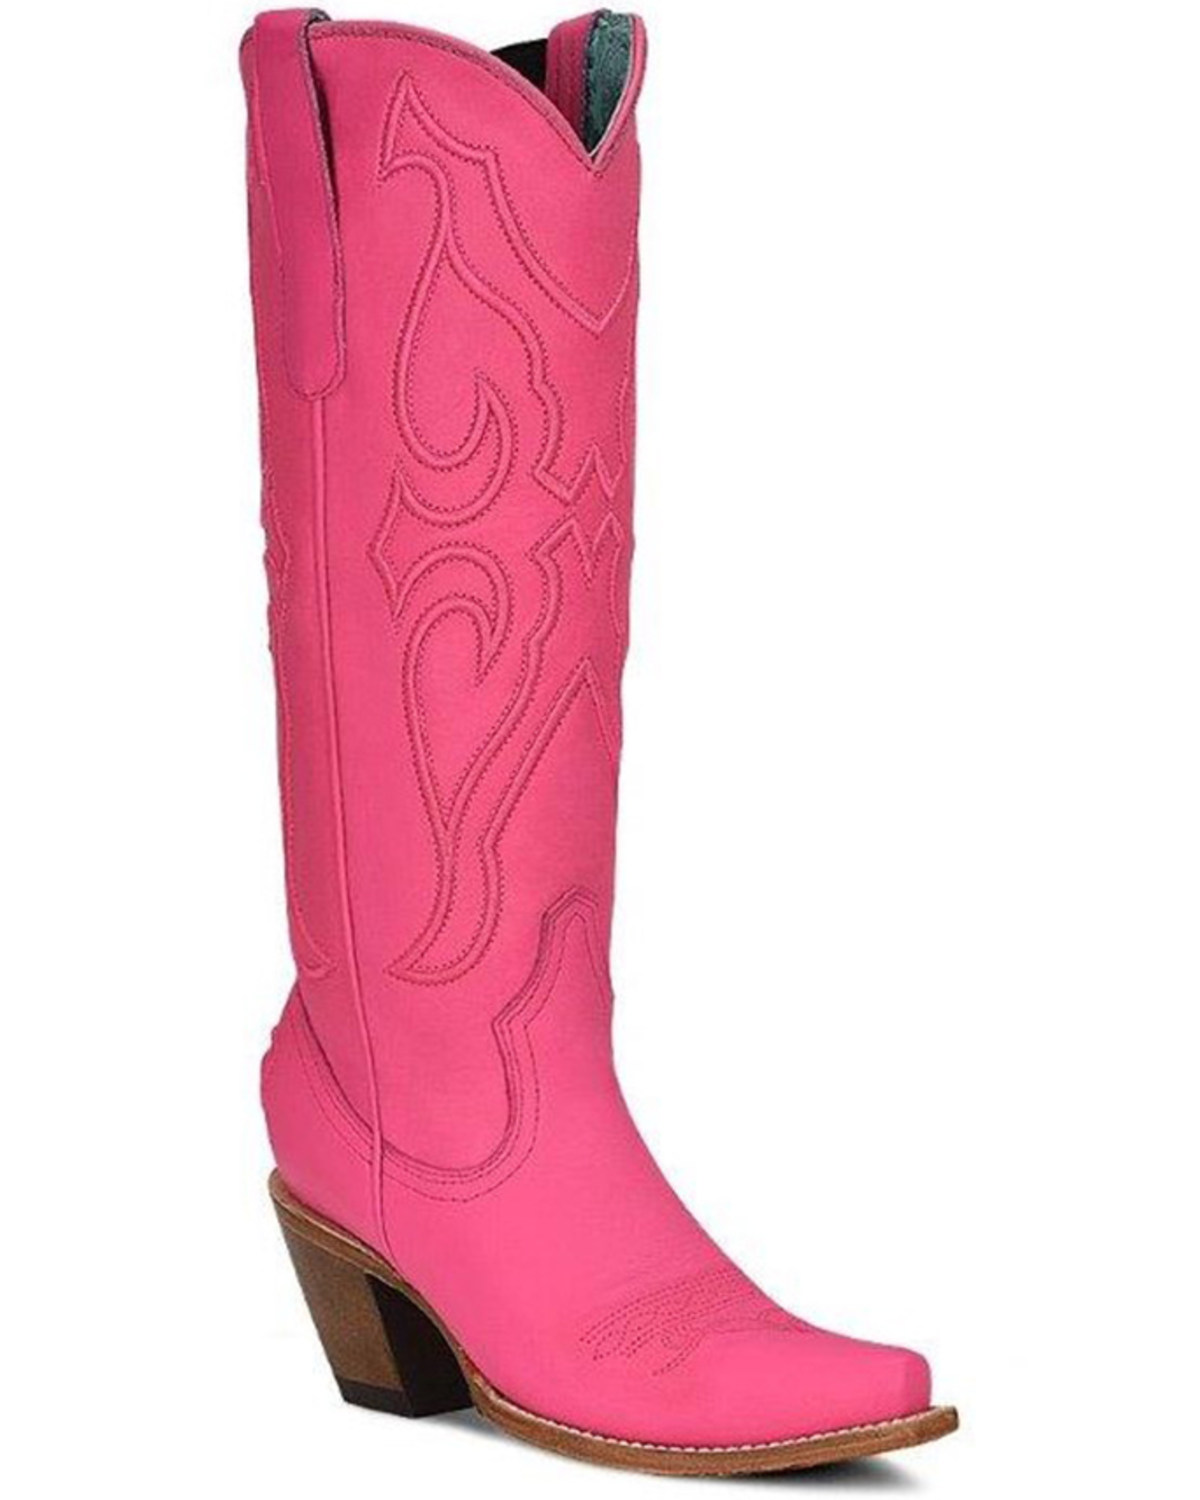 Corral Women's Rushia Tall Western Boots - Snip Toe